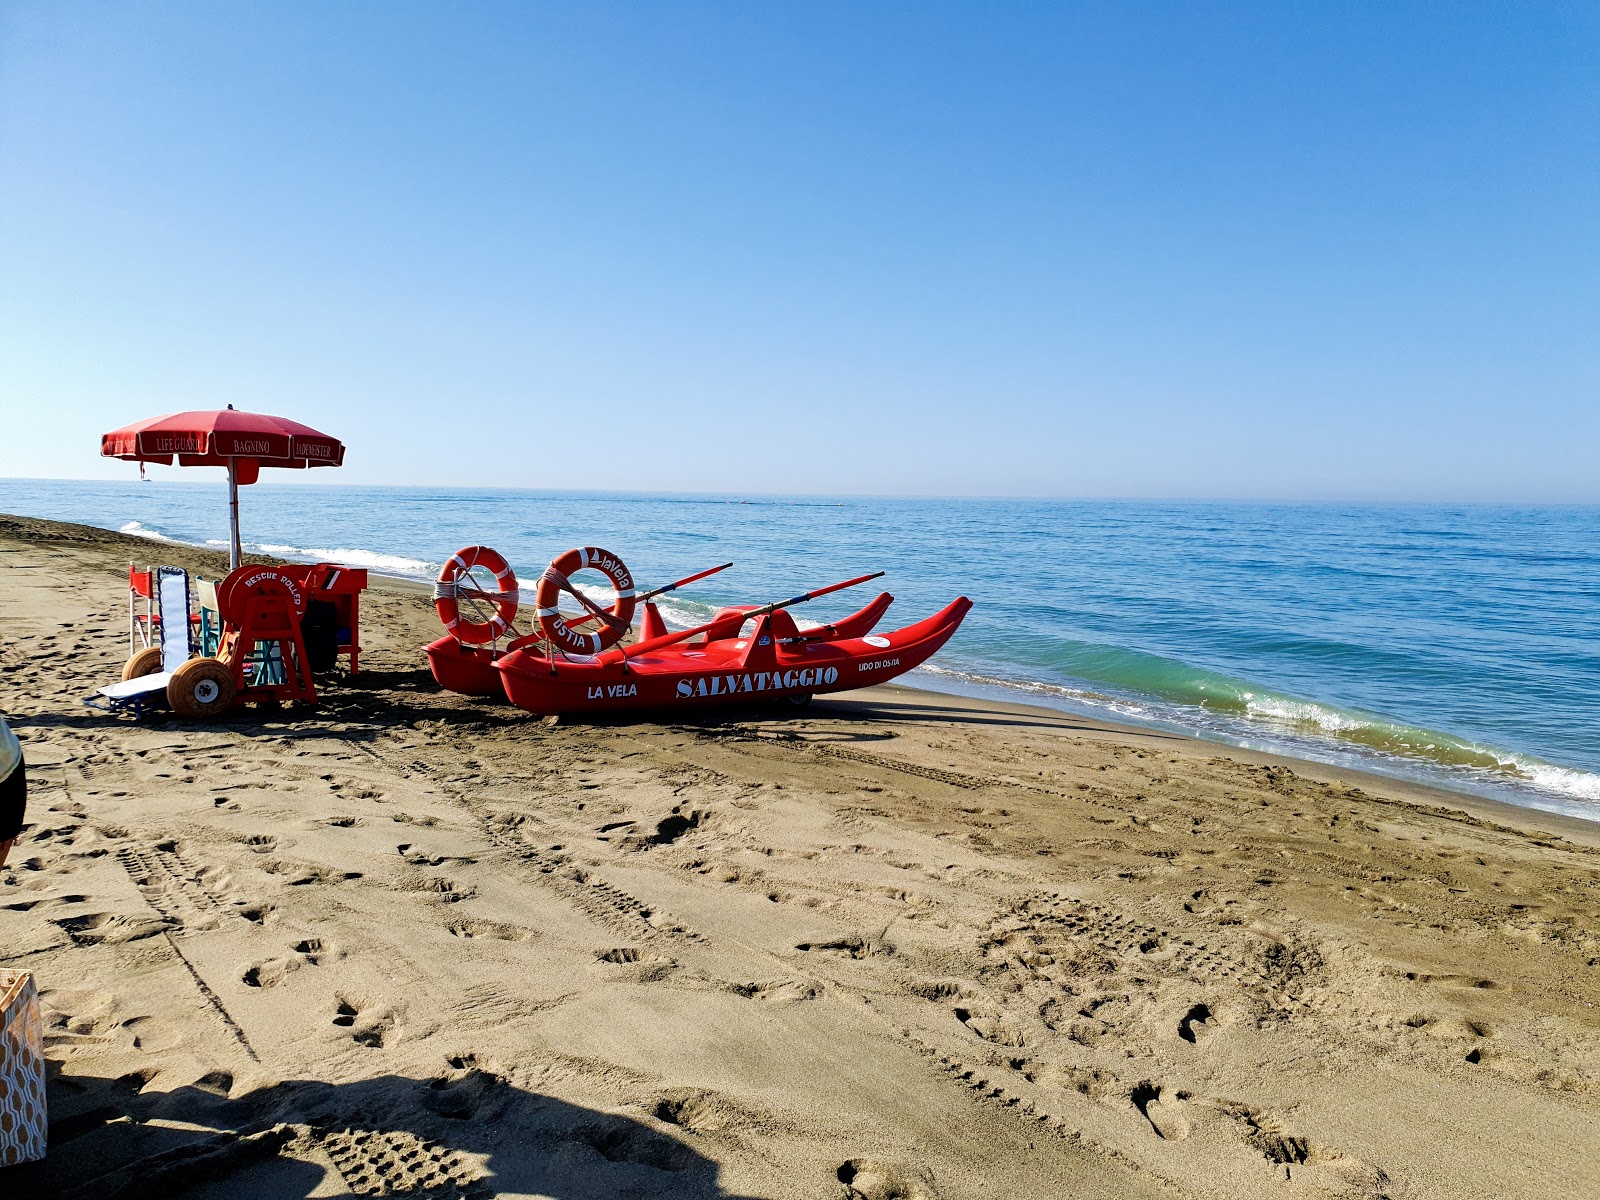 Fotografija La spiaggia di Bettina z turkizna čista voda površino